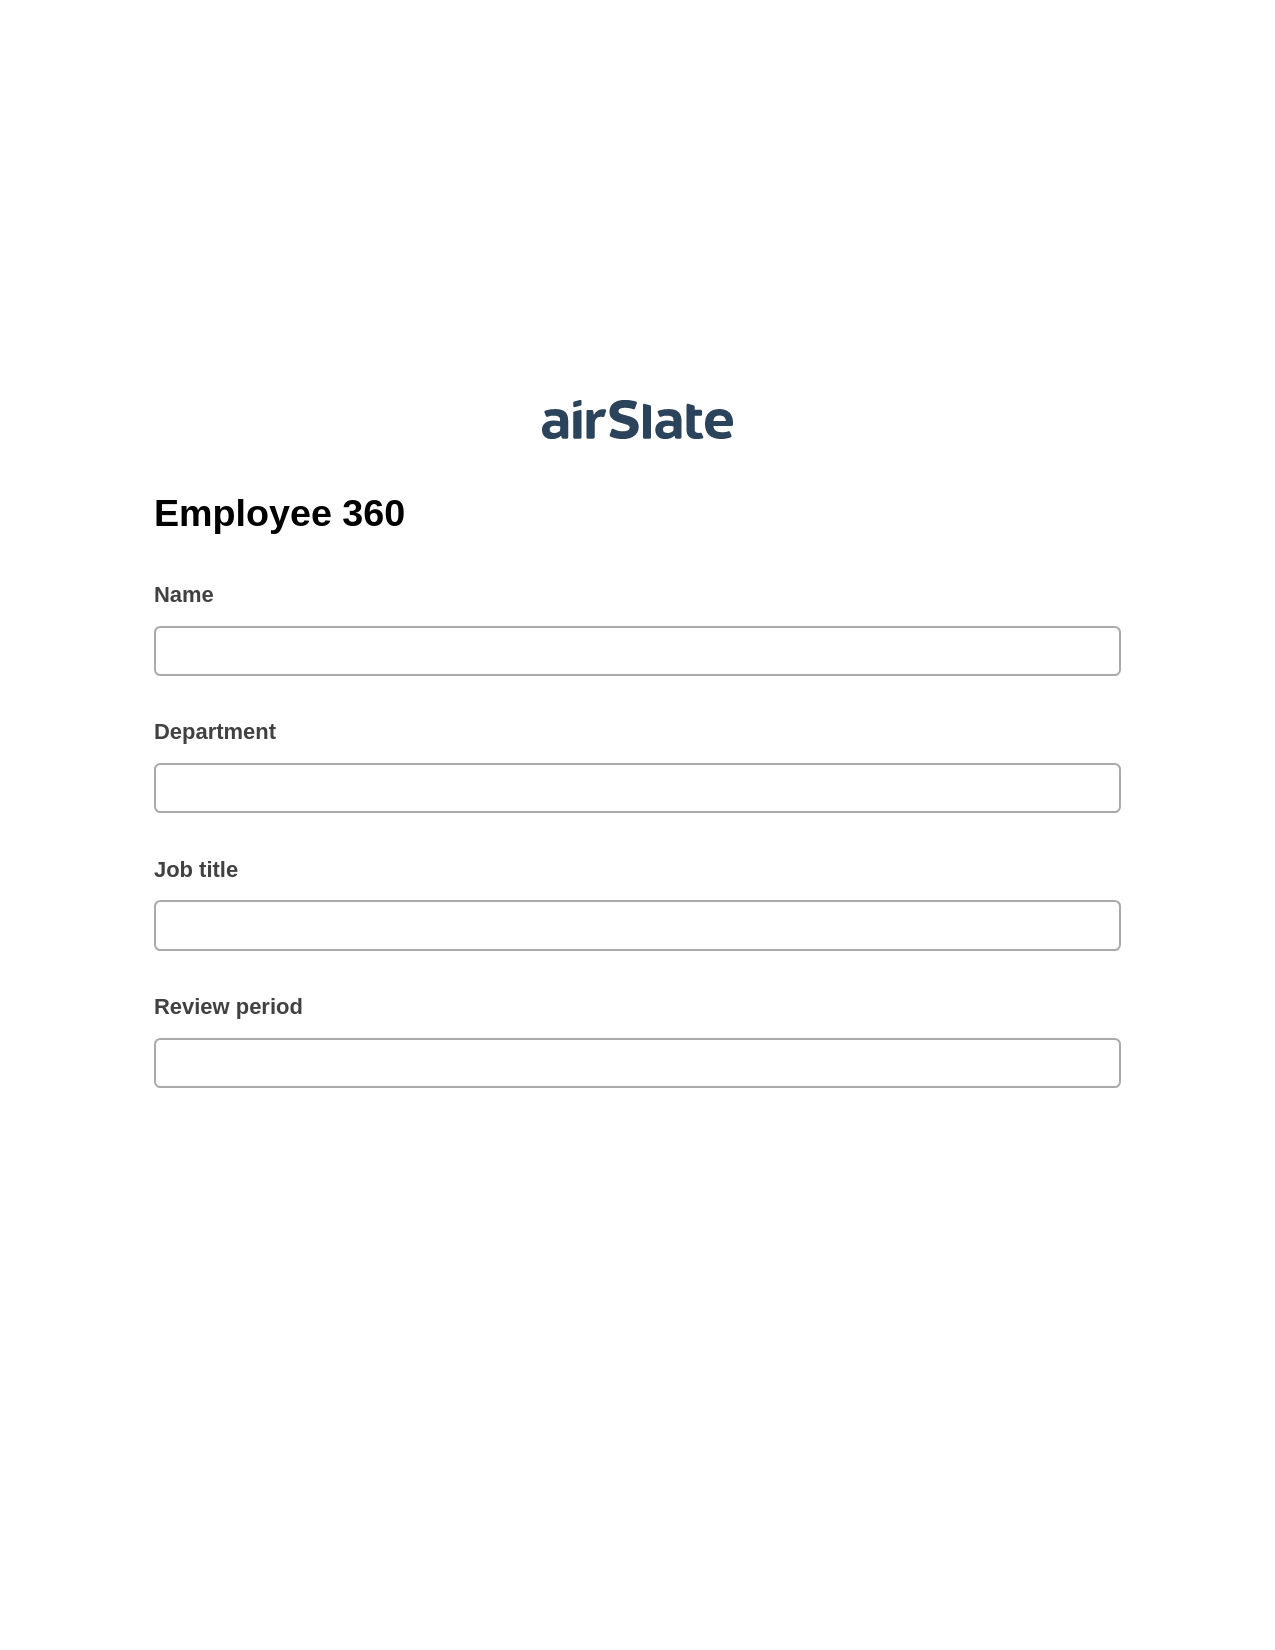 Multirole Employee 360 Pre-fill from Google Sheets Bot, Email Notification Bot, Email Notification Postfinish Bot